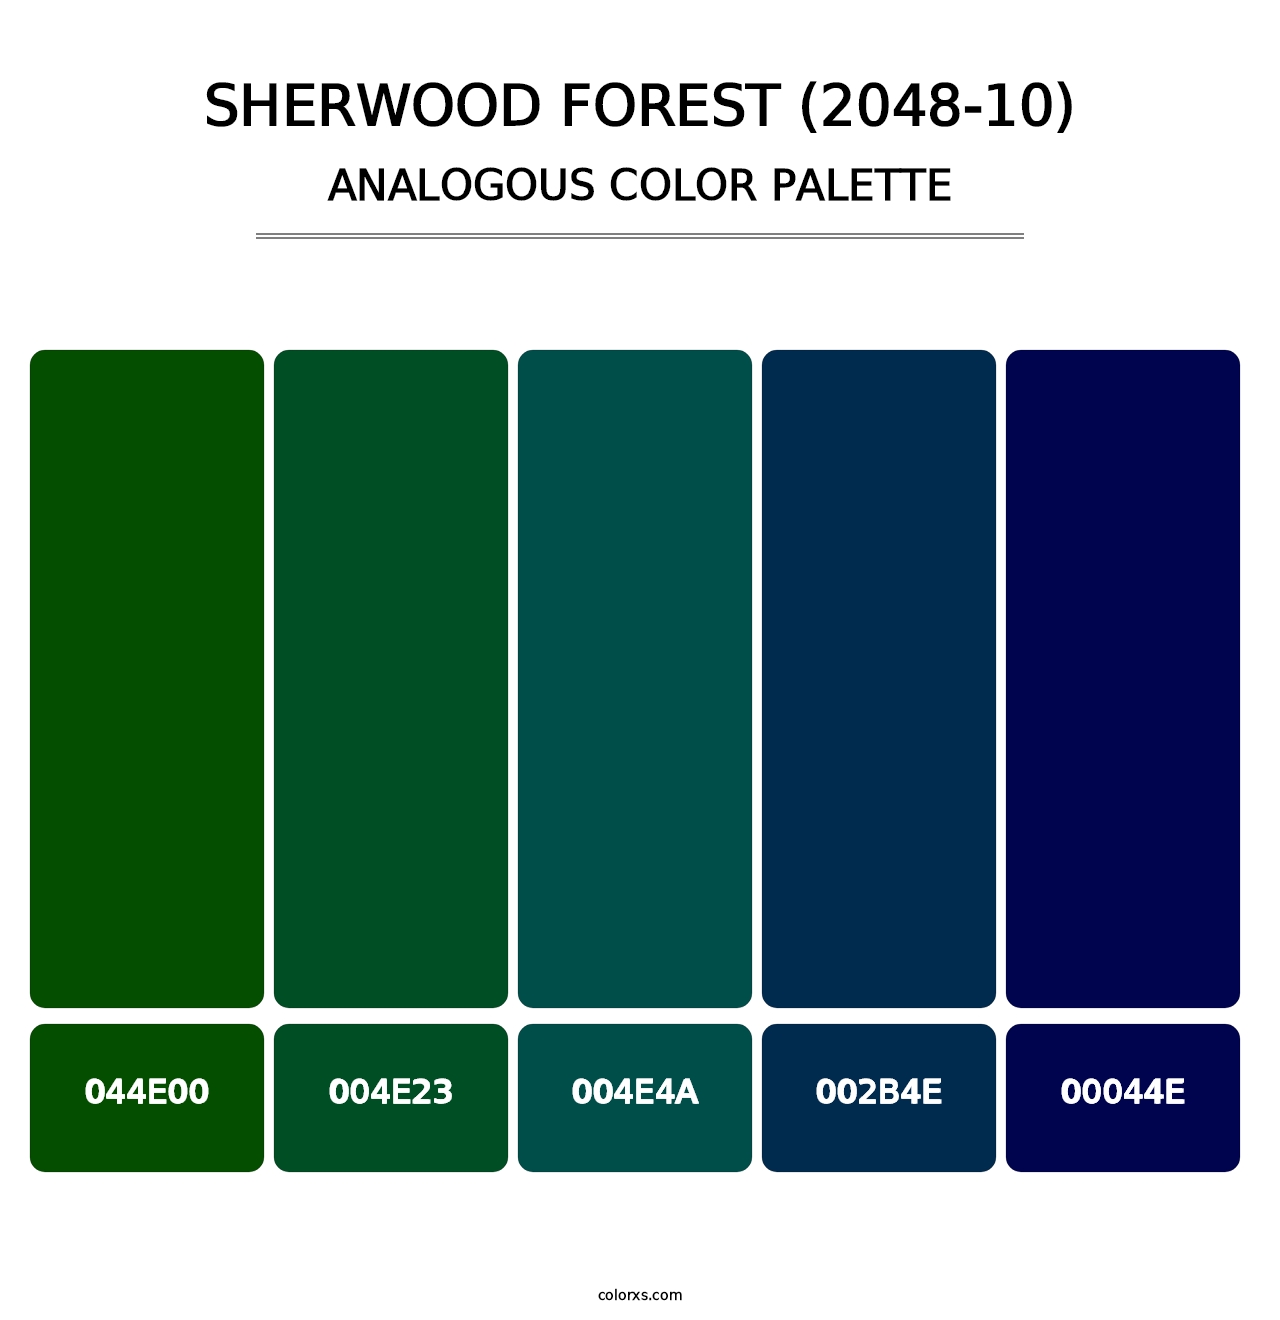 Sherwood Forest (2048-10) - Analogous Color Palette